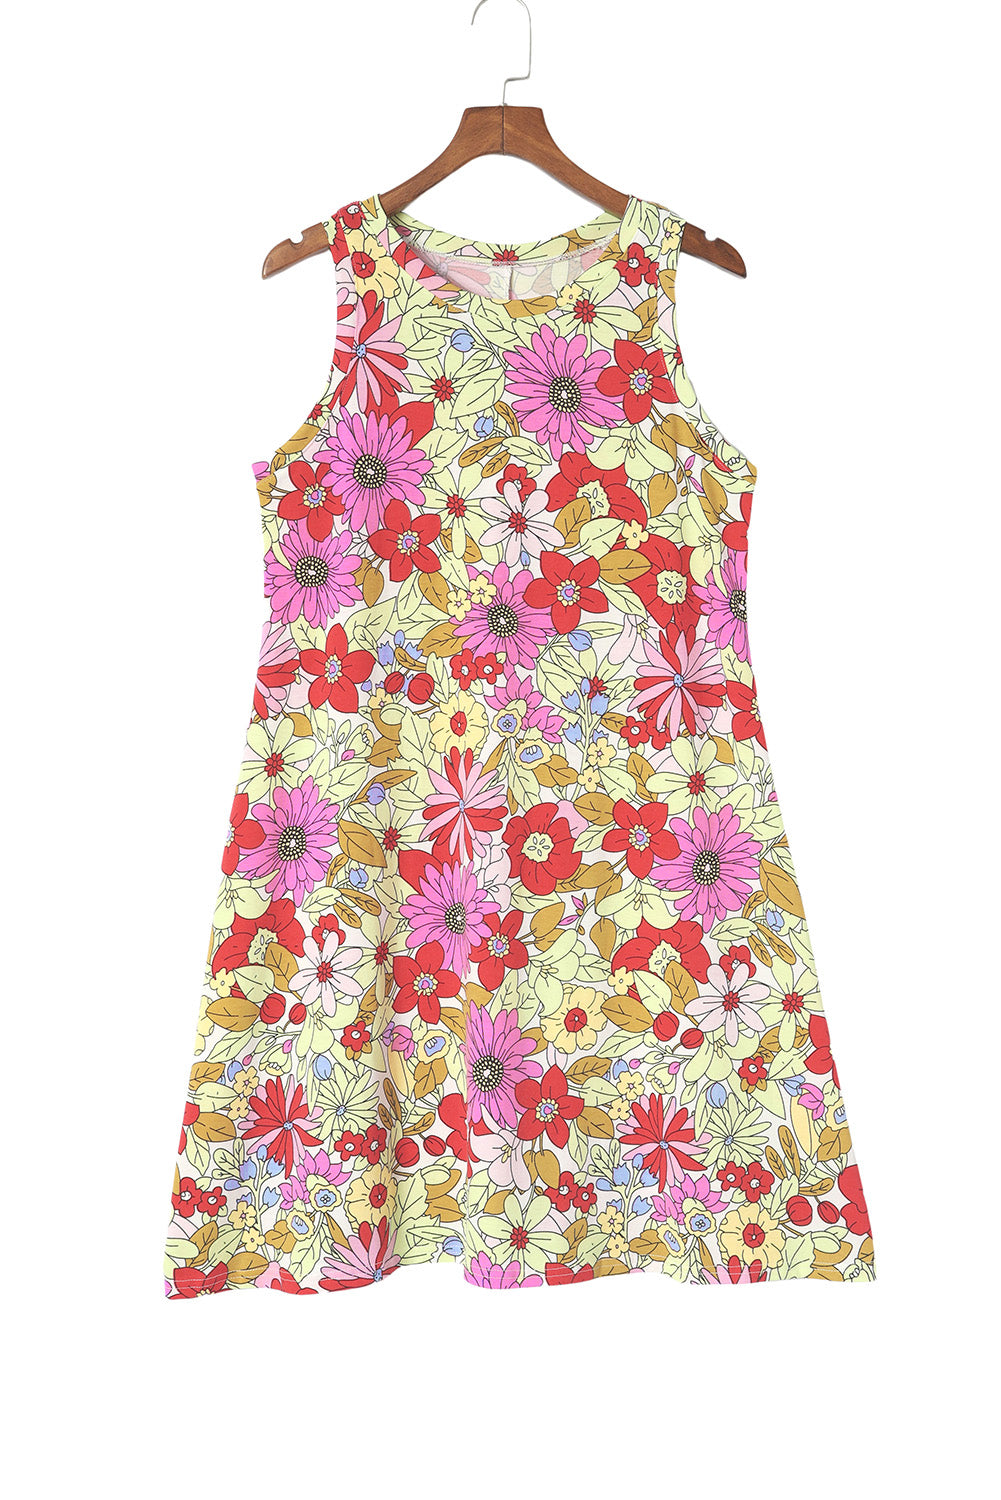 Multicolor Round Neck Sleeveless Floral Short Dress